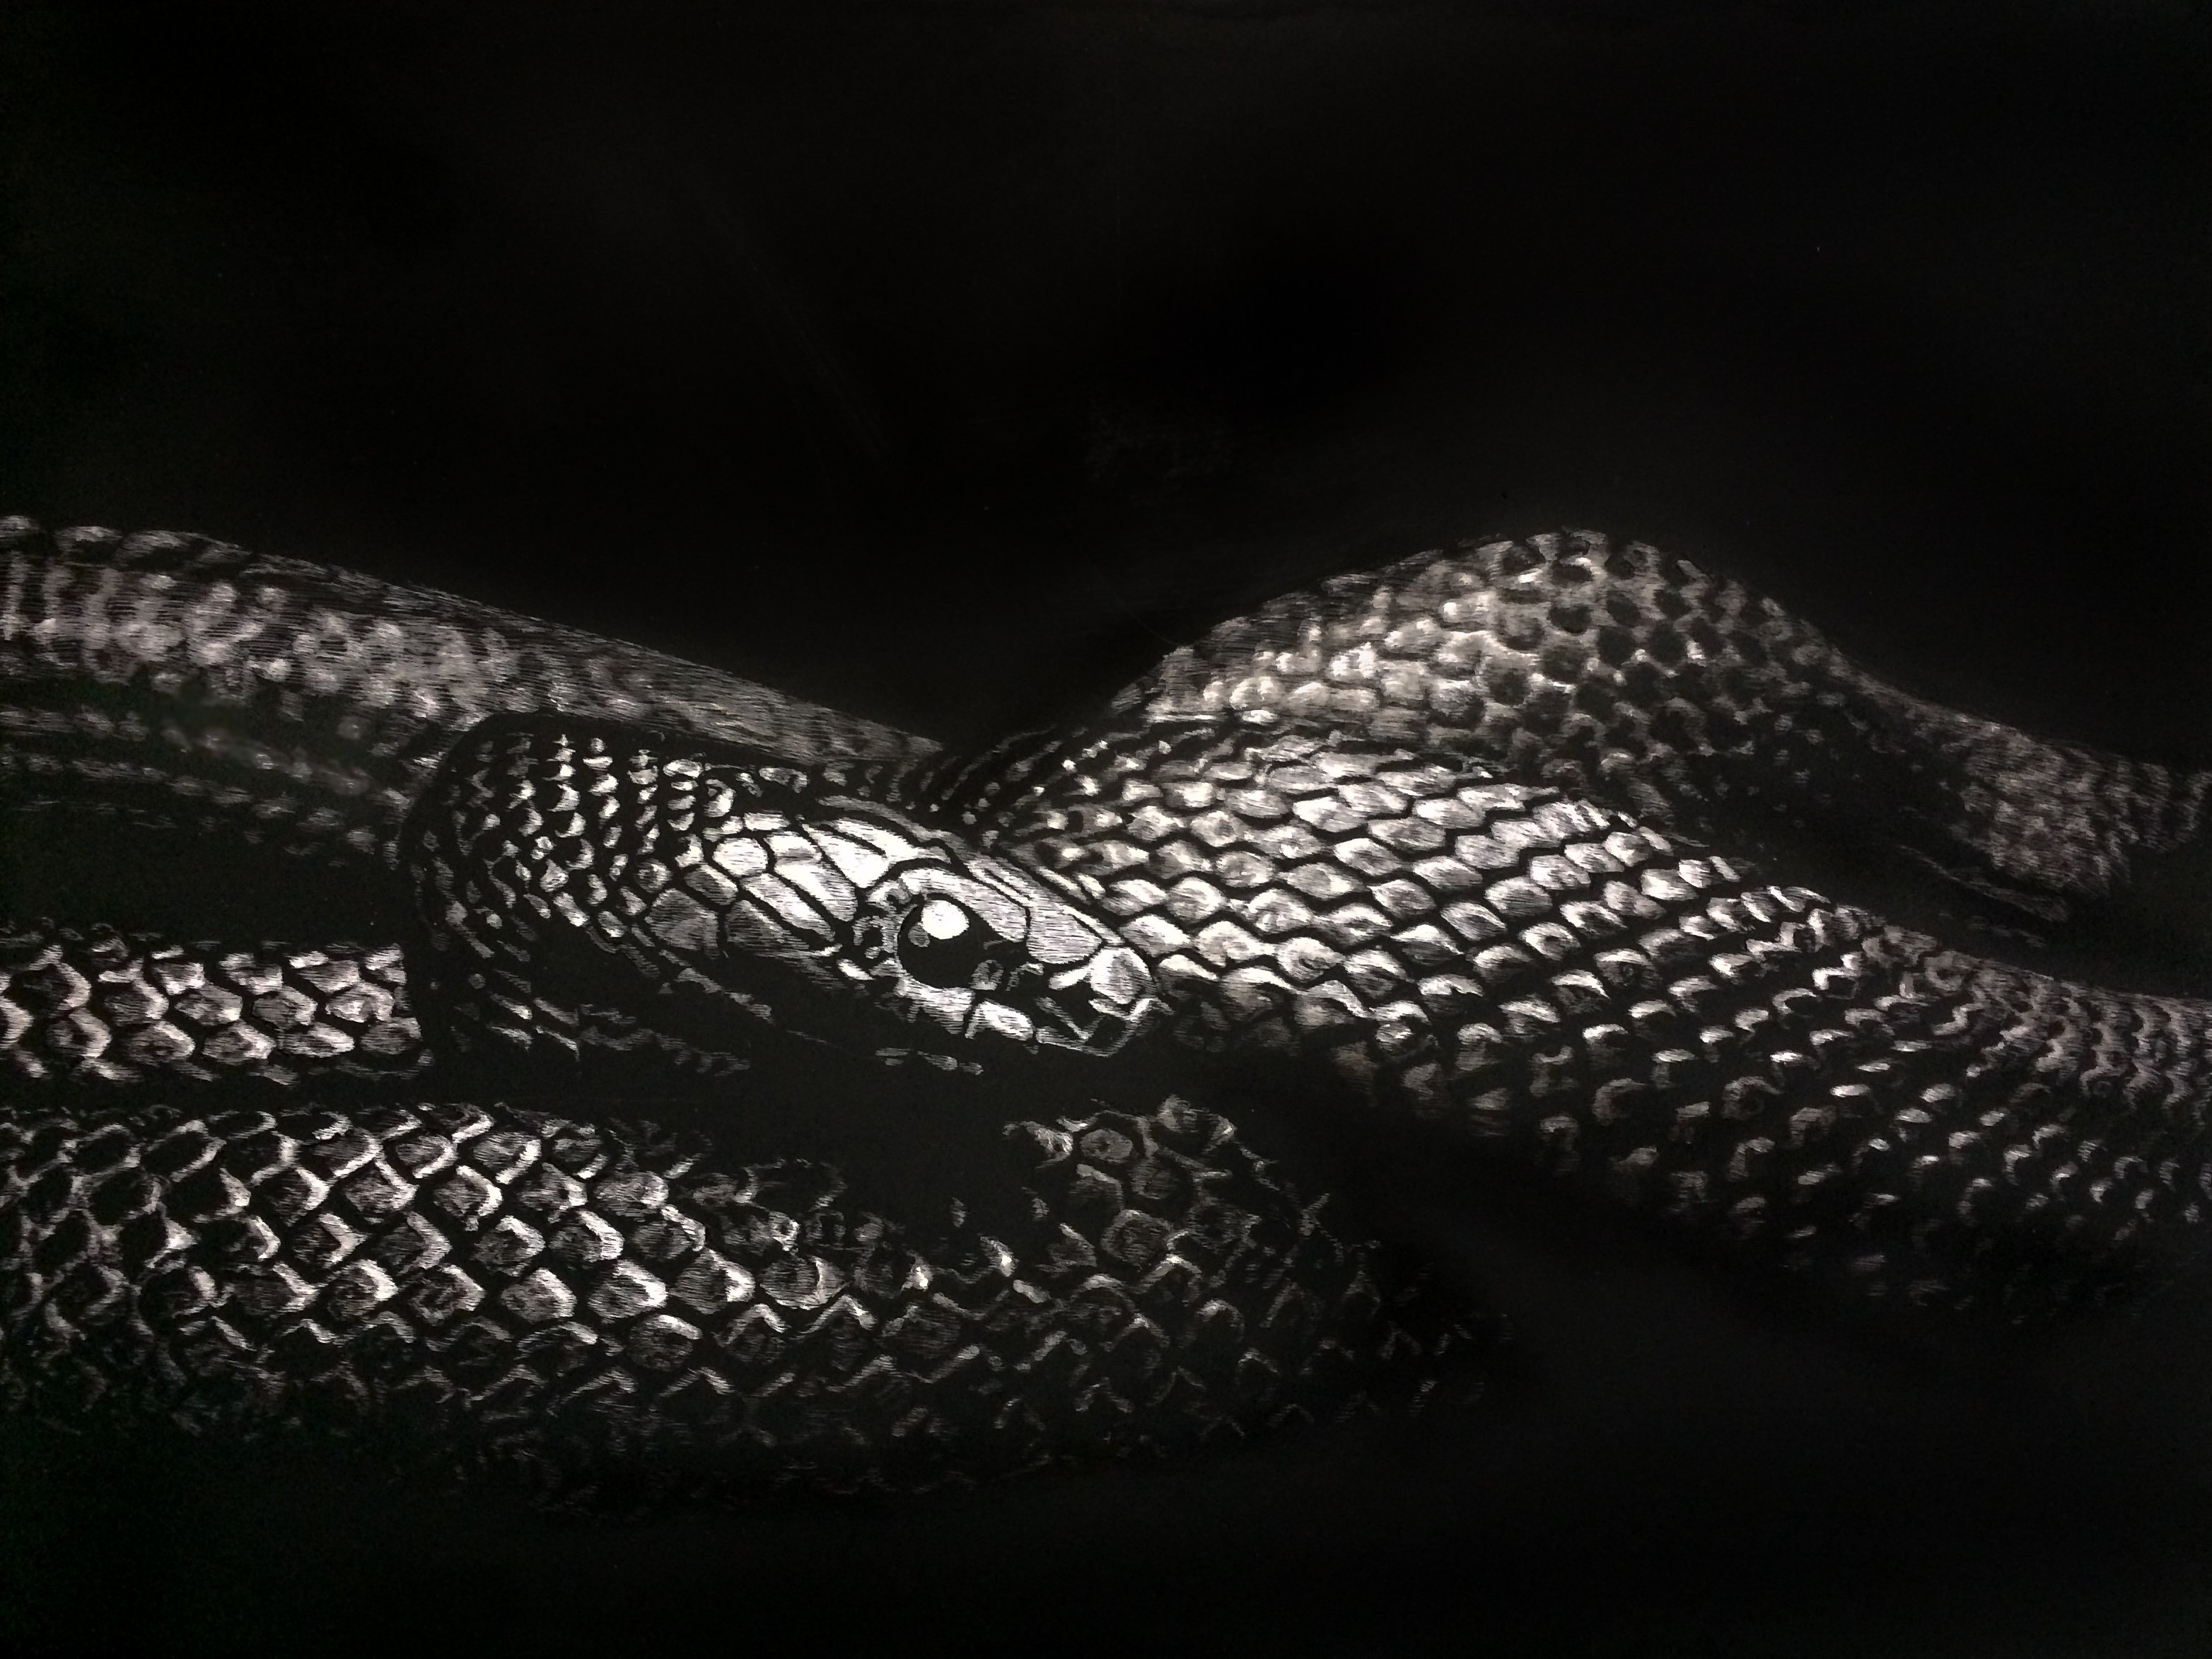 фото змеи с надписью